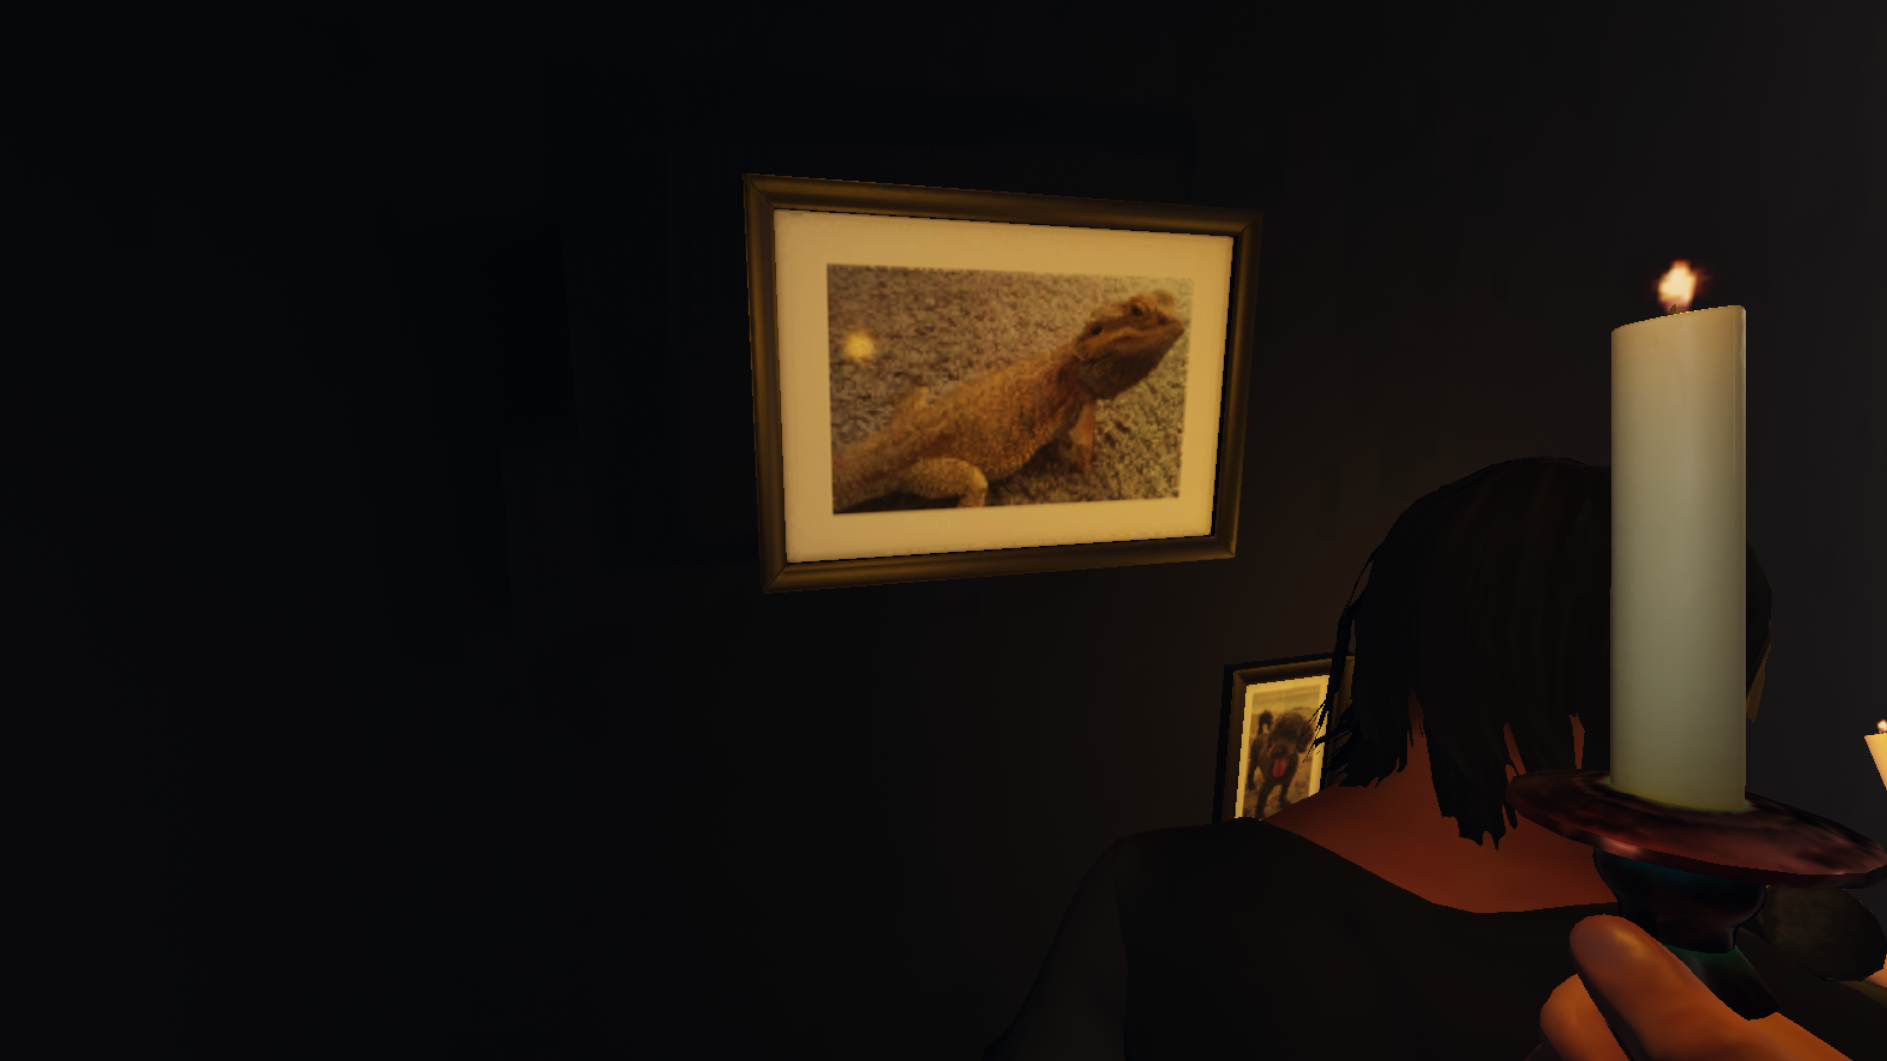 A hanging photo of a lizard